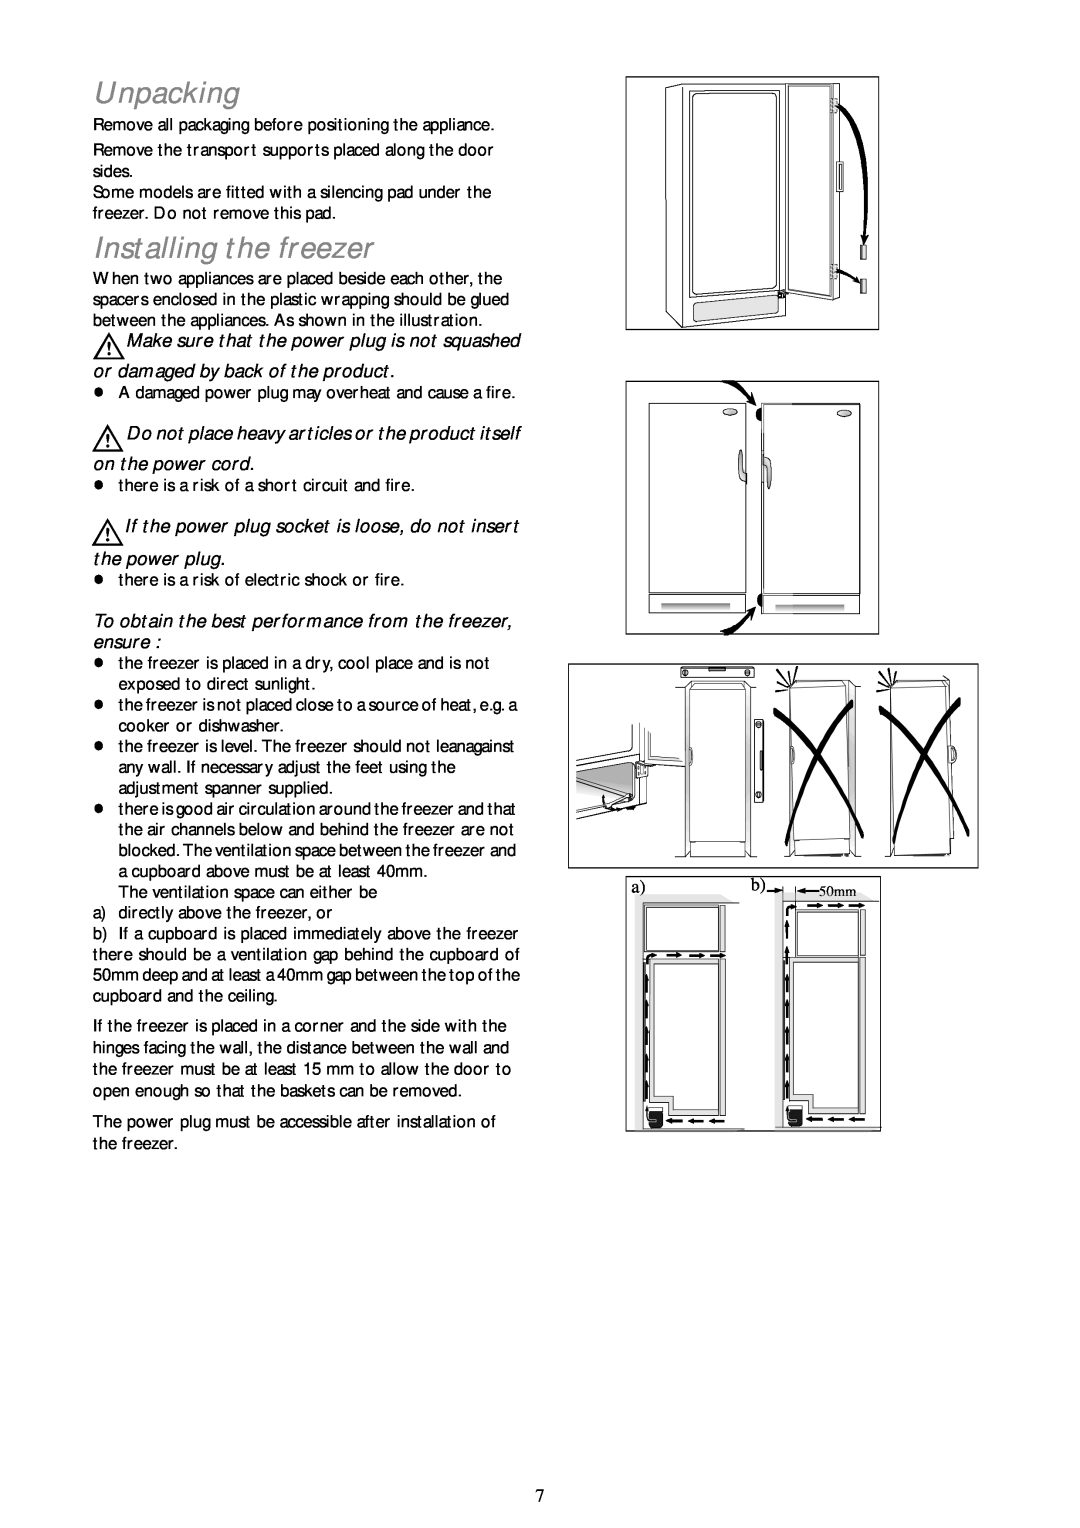 John Lewis JLFZW 1806 instruction manual Unpacking, Installing the freezer 